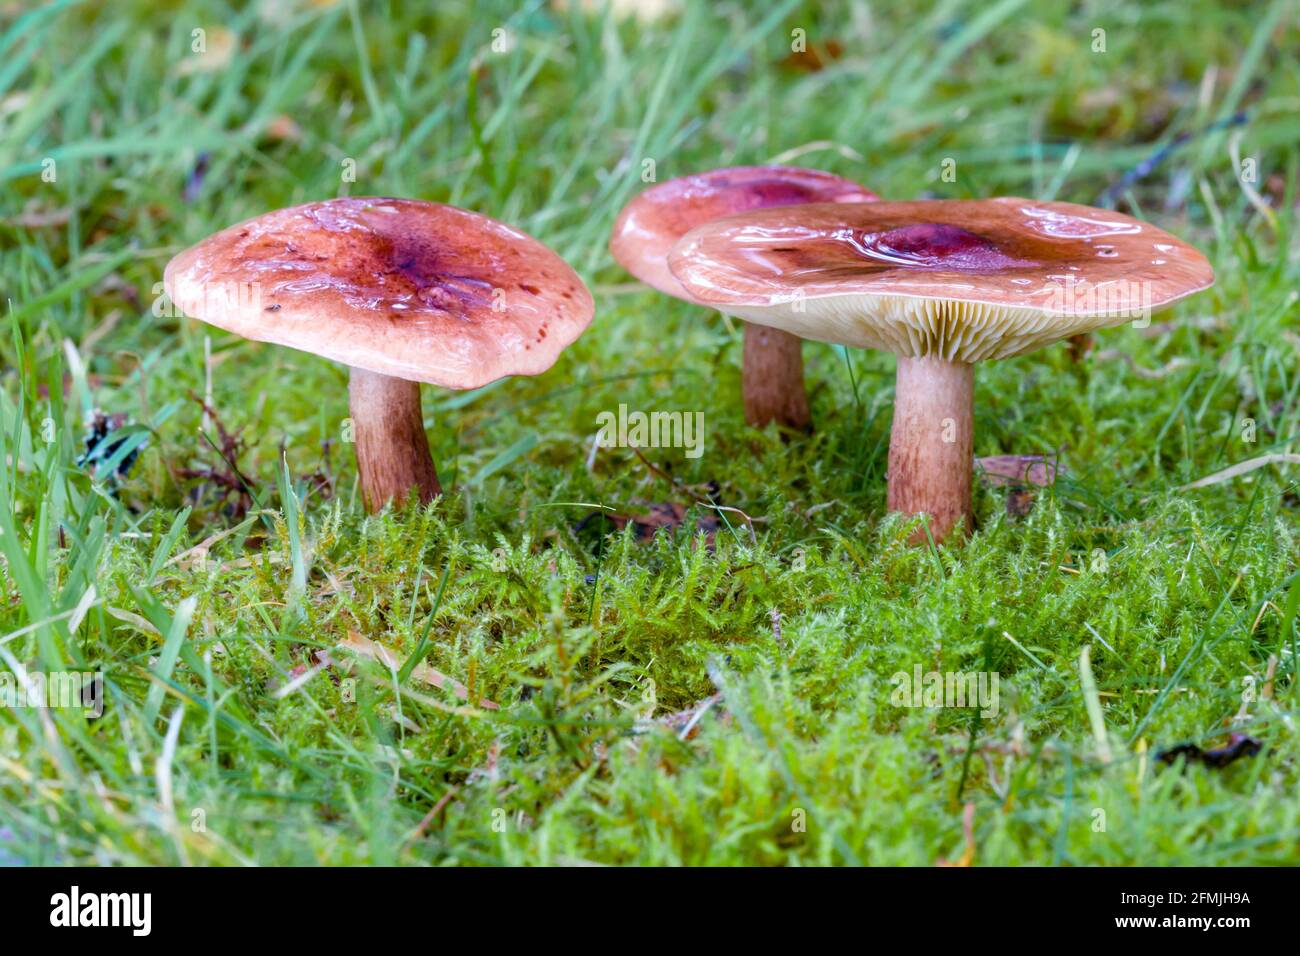 Herald of Winter Hygrophorus hypothejus mushroom growing on grass in the Highlands of Scotland Stock Photo